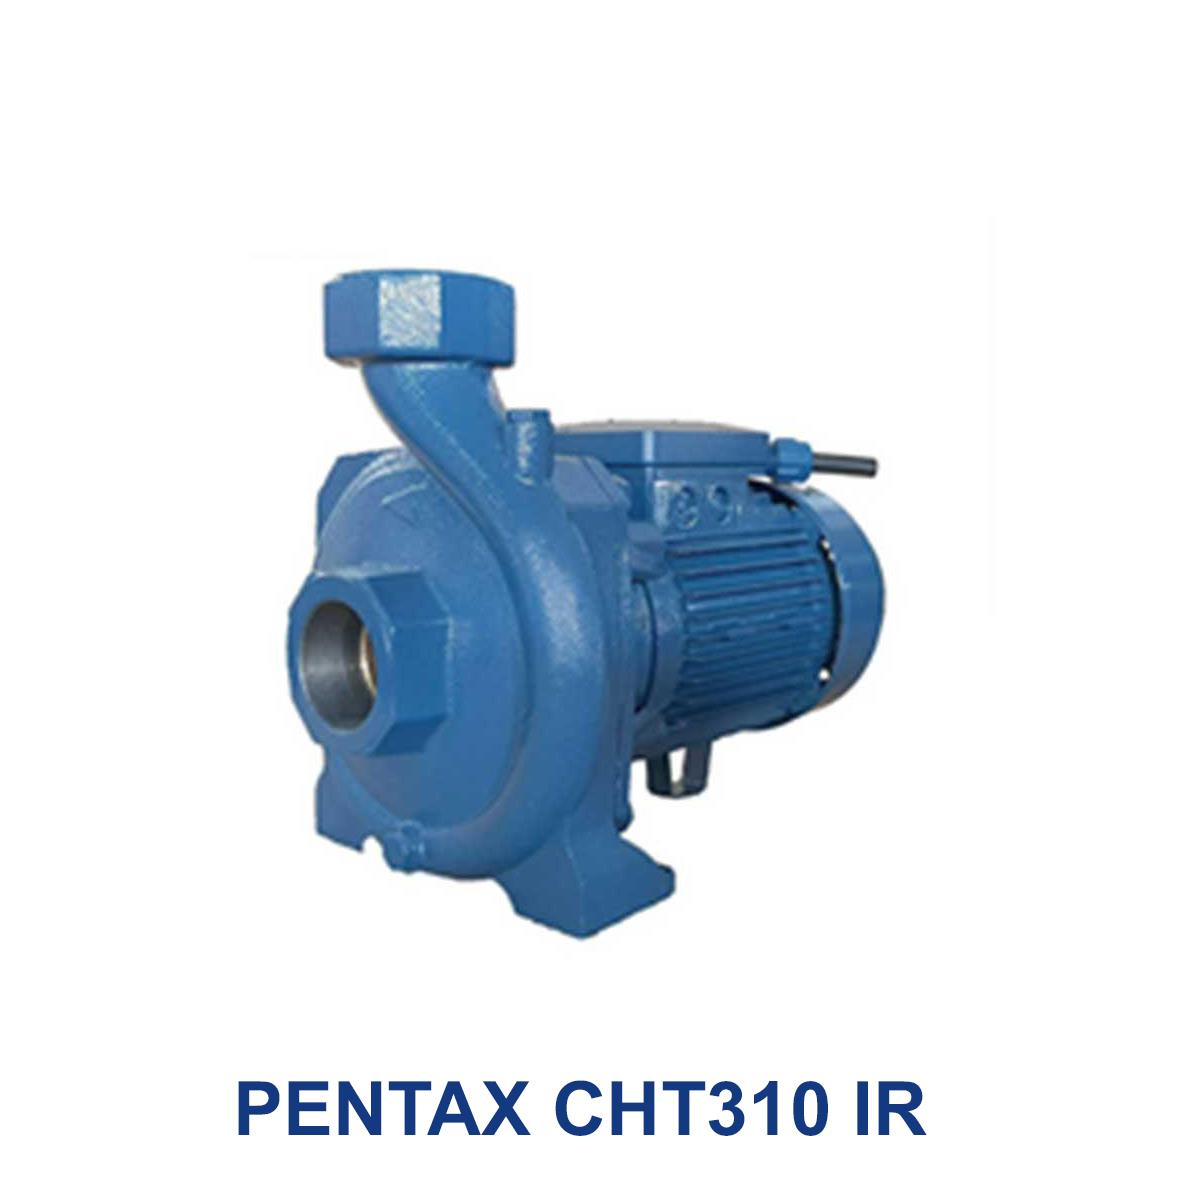 PENTAX-CHT310-IR